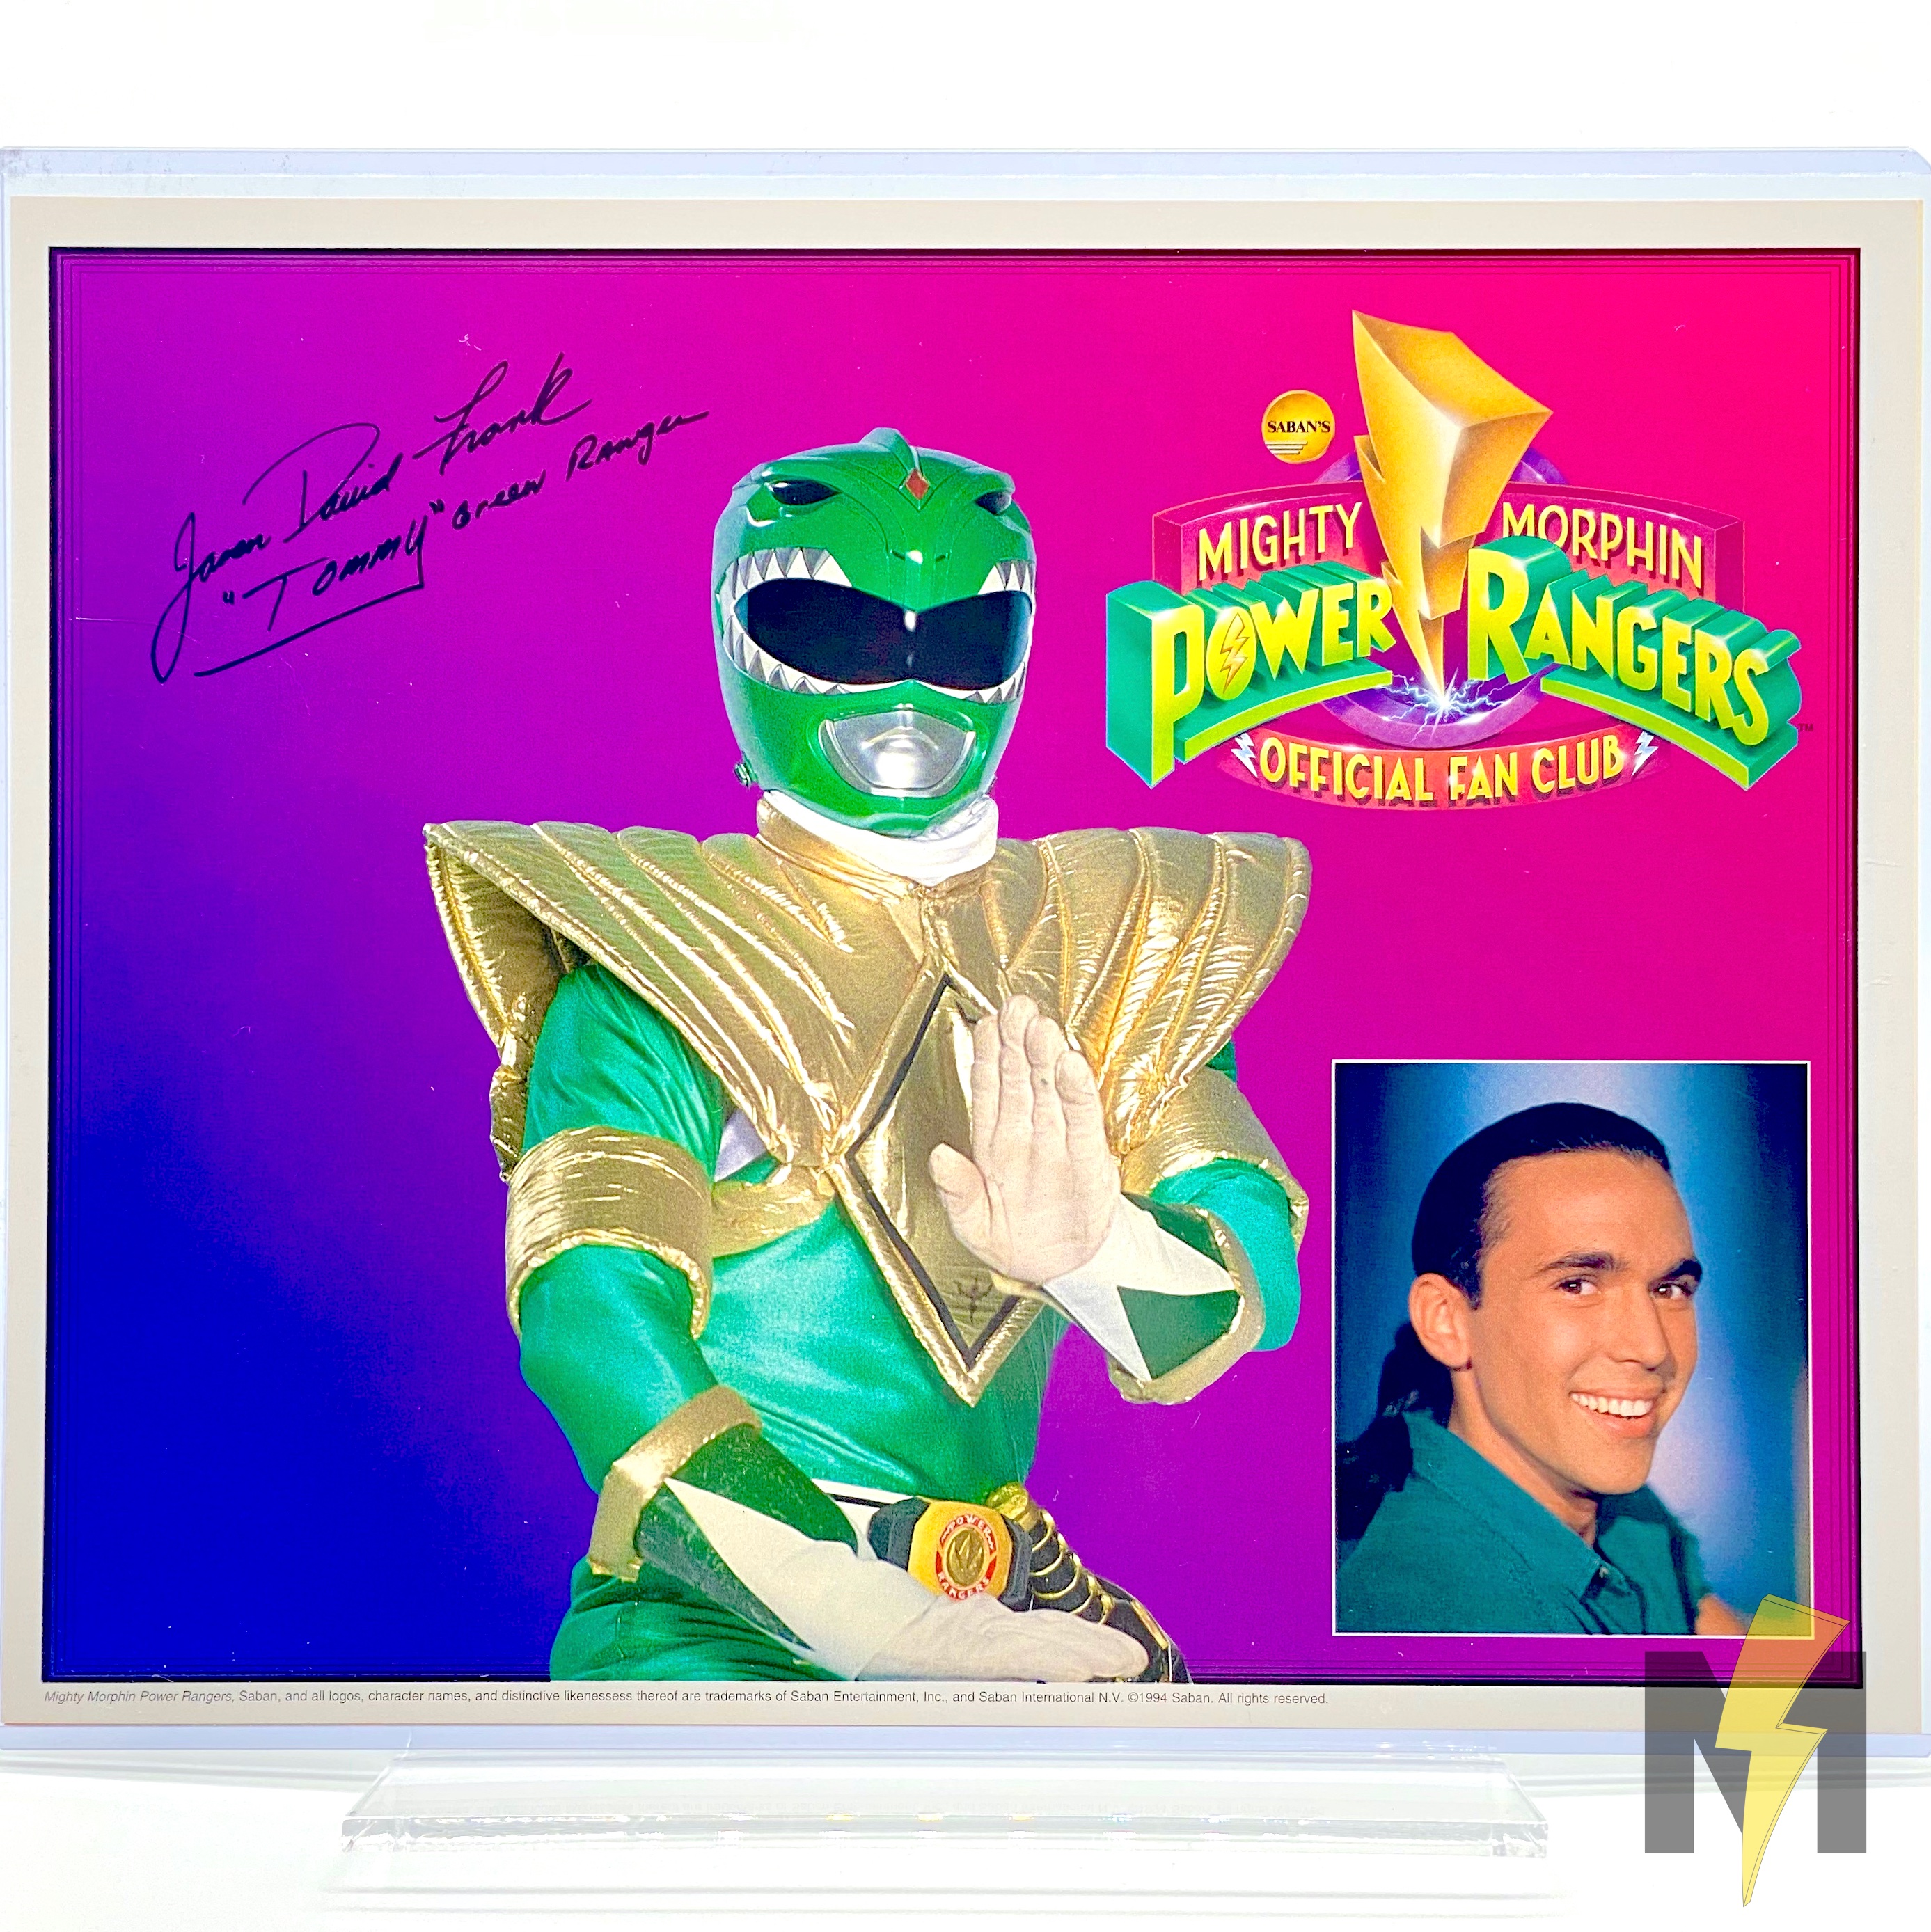 JASON DAVID FRANK - Official Fan Page - Power Rangers #powerrangers